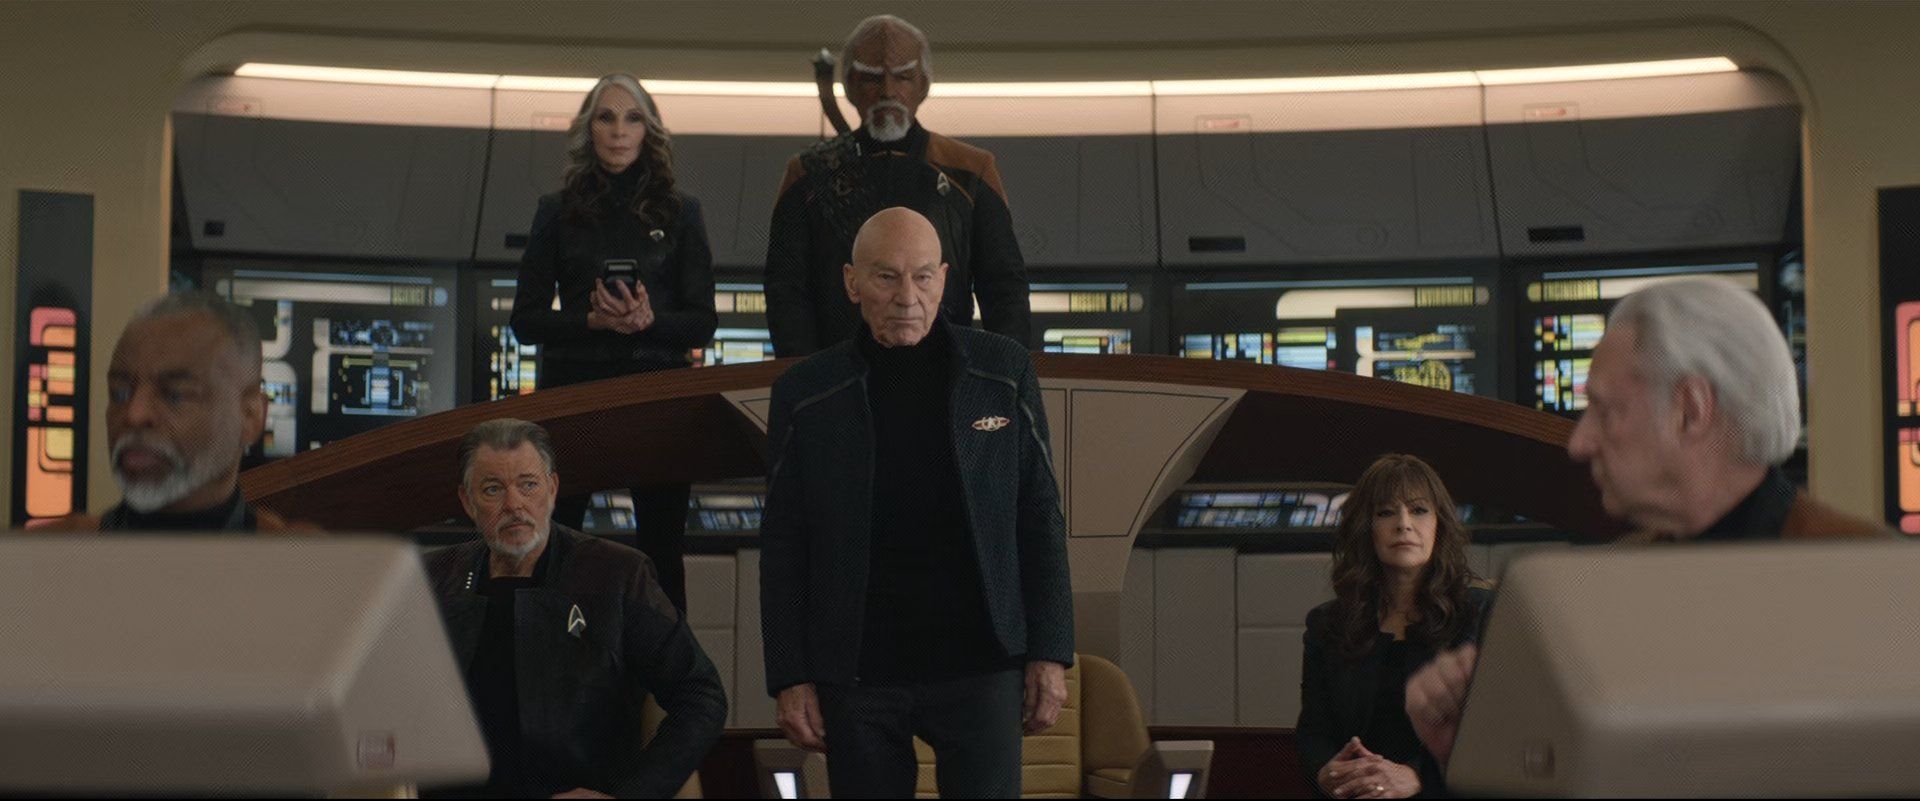 The Cast of Star Trek Picard on the bridge of the Enterprise D in Season 3 Episode 9